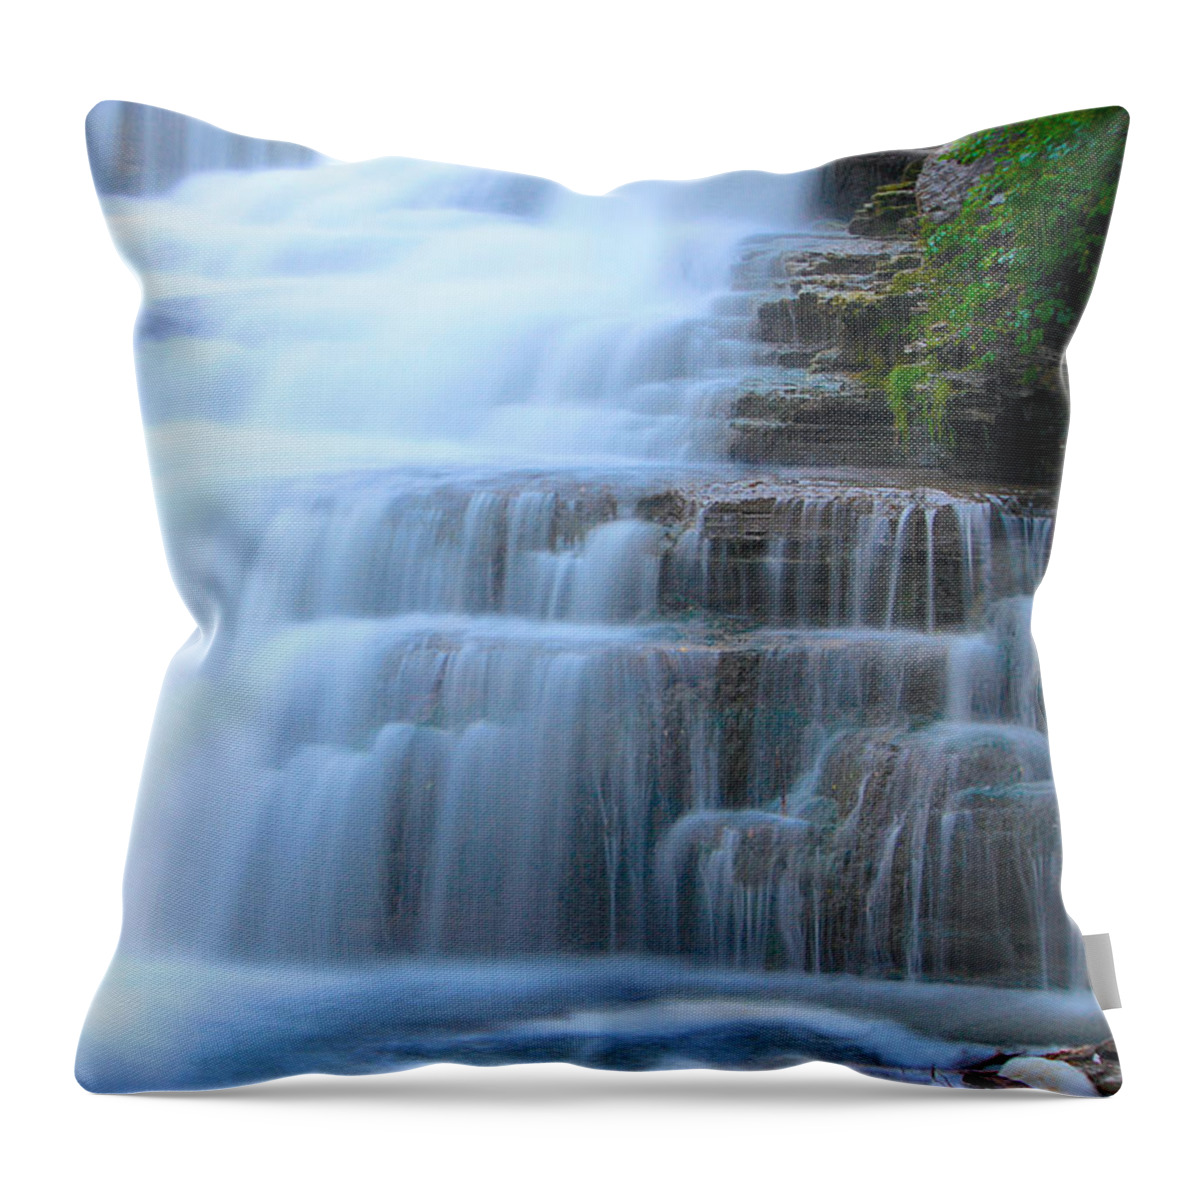 Art Prints Throw Pillow featuring the photograph Glen Falls by Nunweiler Photography